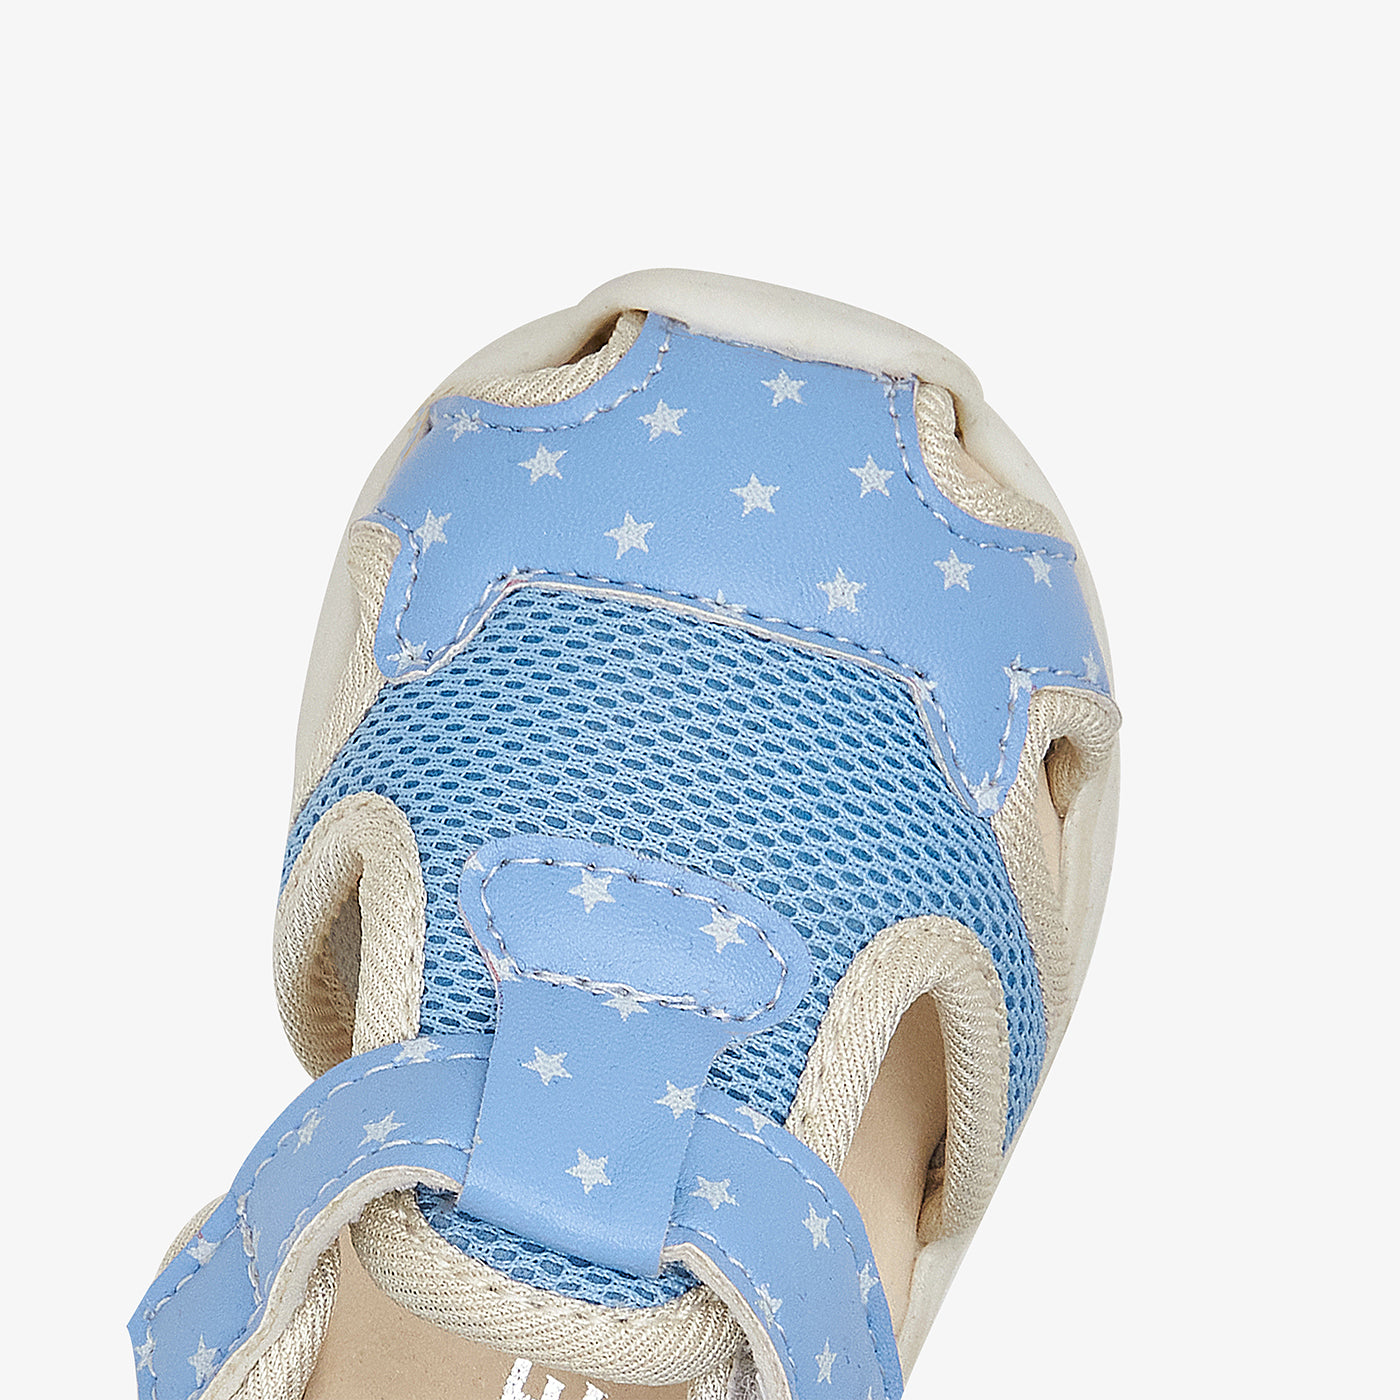 Starry Boys Sandals